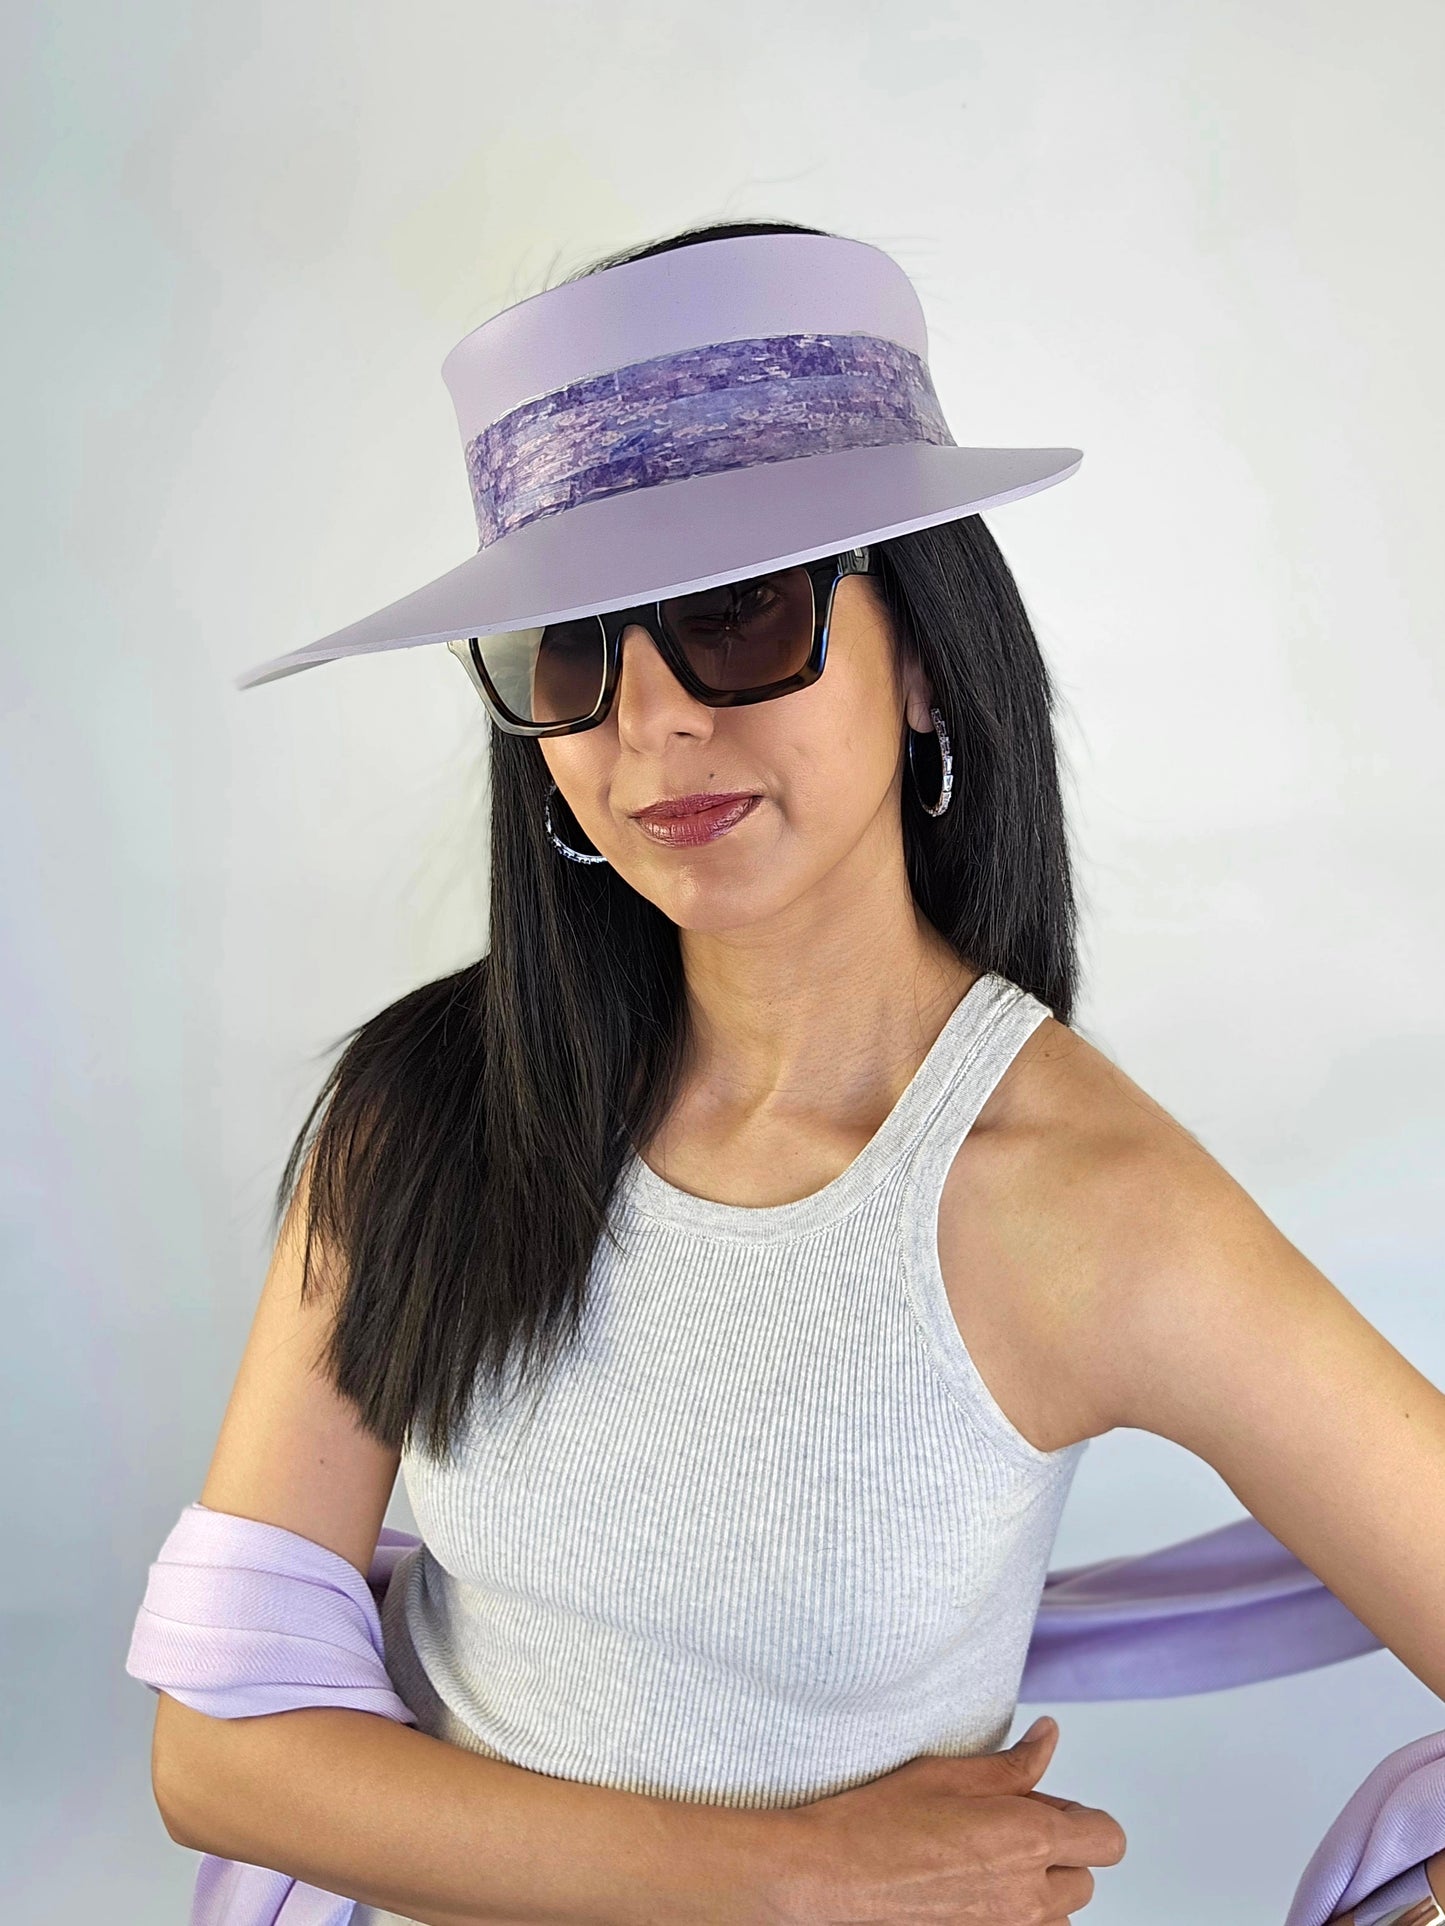 Tall Lilac Purple Audrey Sun Visor Hat with Elegant Purple Monet Style Band: 1950s, Walks, Brunch, Asian, Golf, Summer, Church, No Headache, Pool, Beach